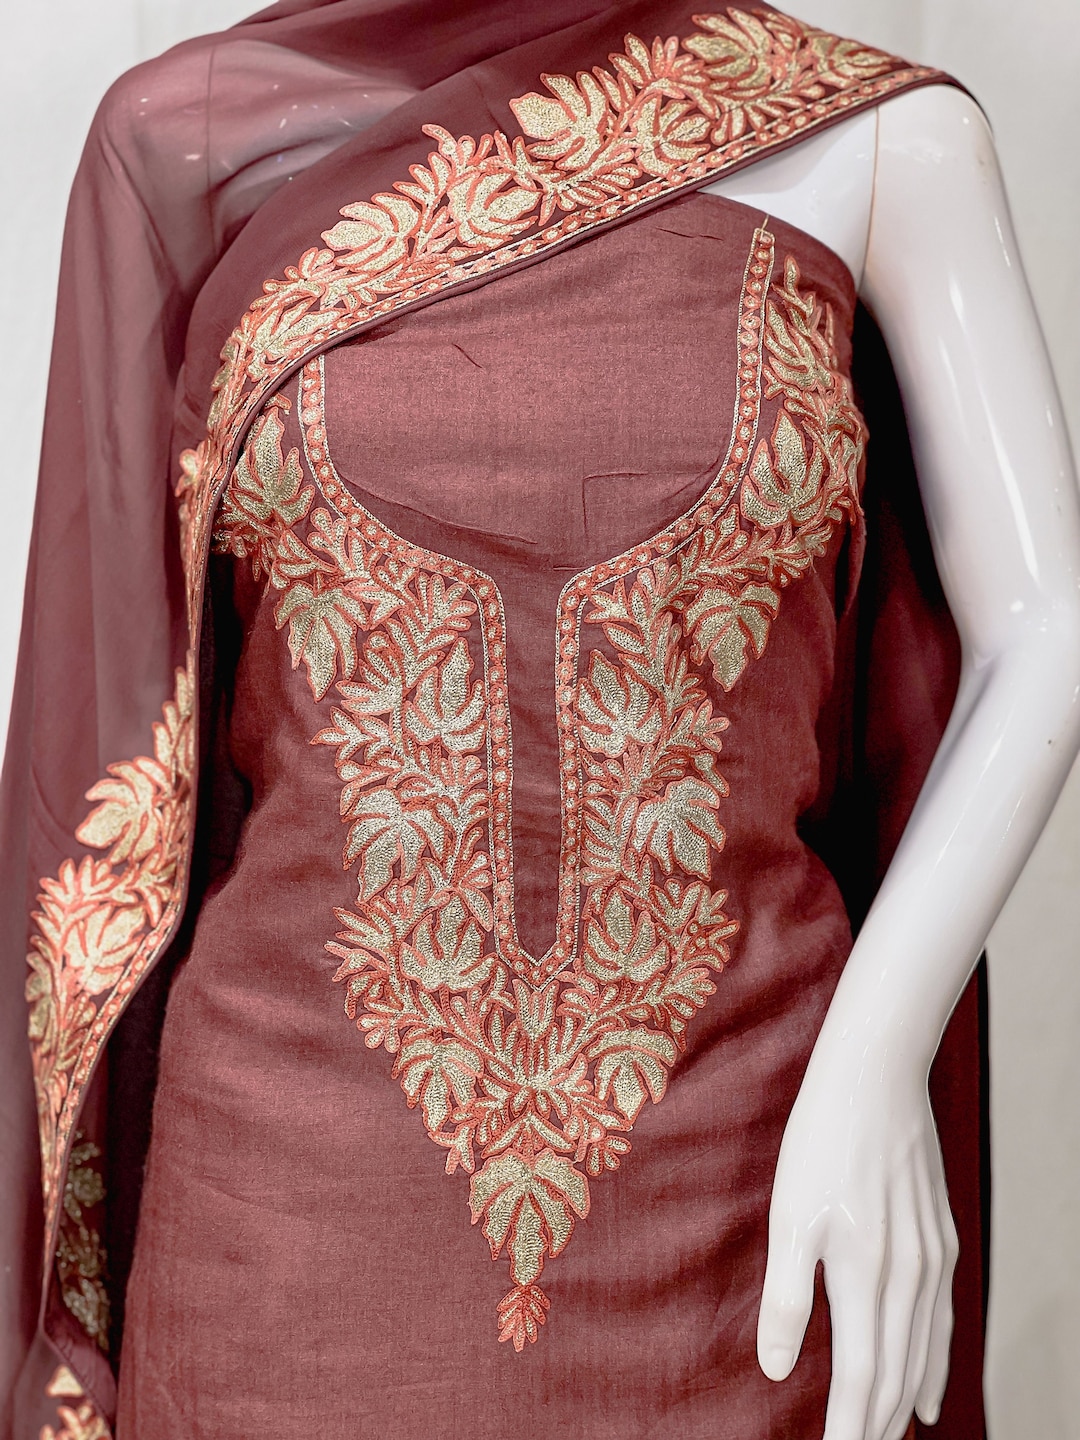 Aari Work Fused with Hand Art Pearl Work Kashmir Suit, Salwar Suit, Ethnic  Dress | eBay